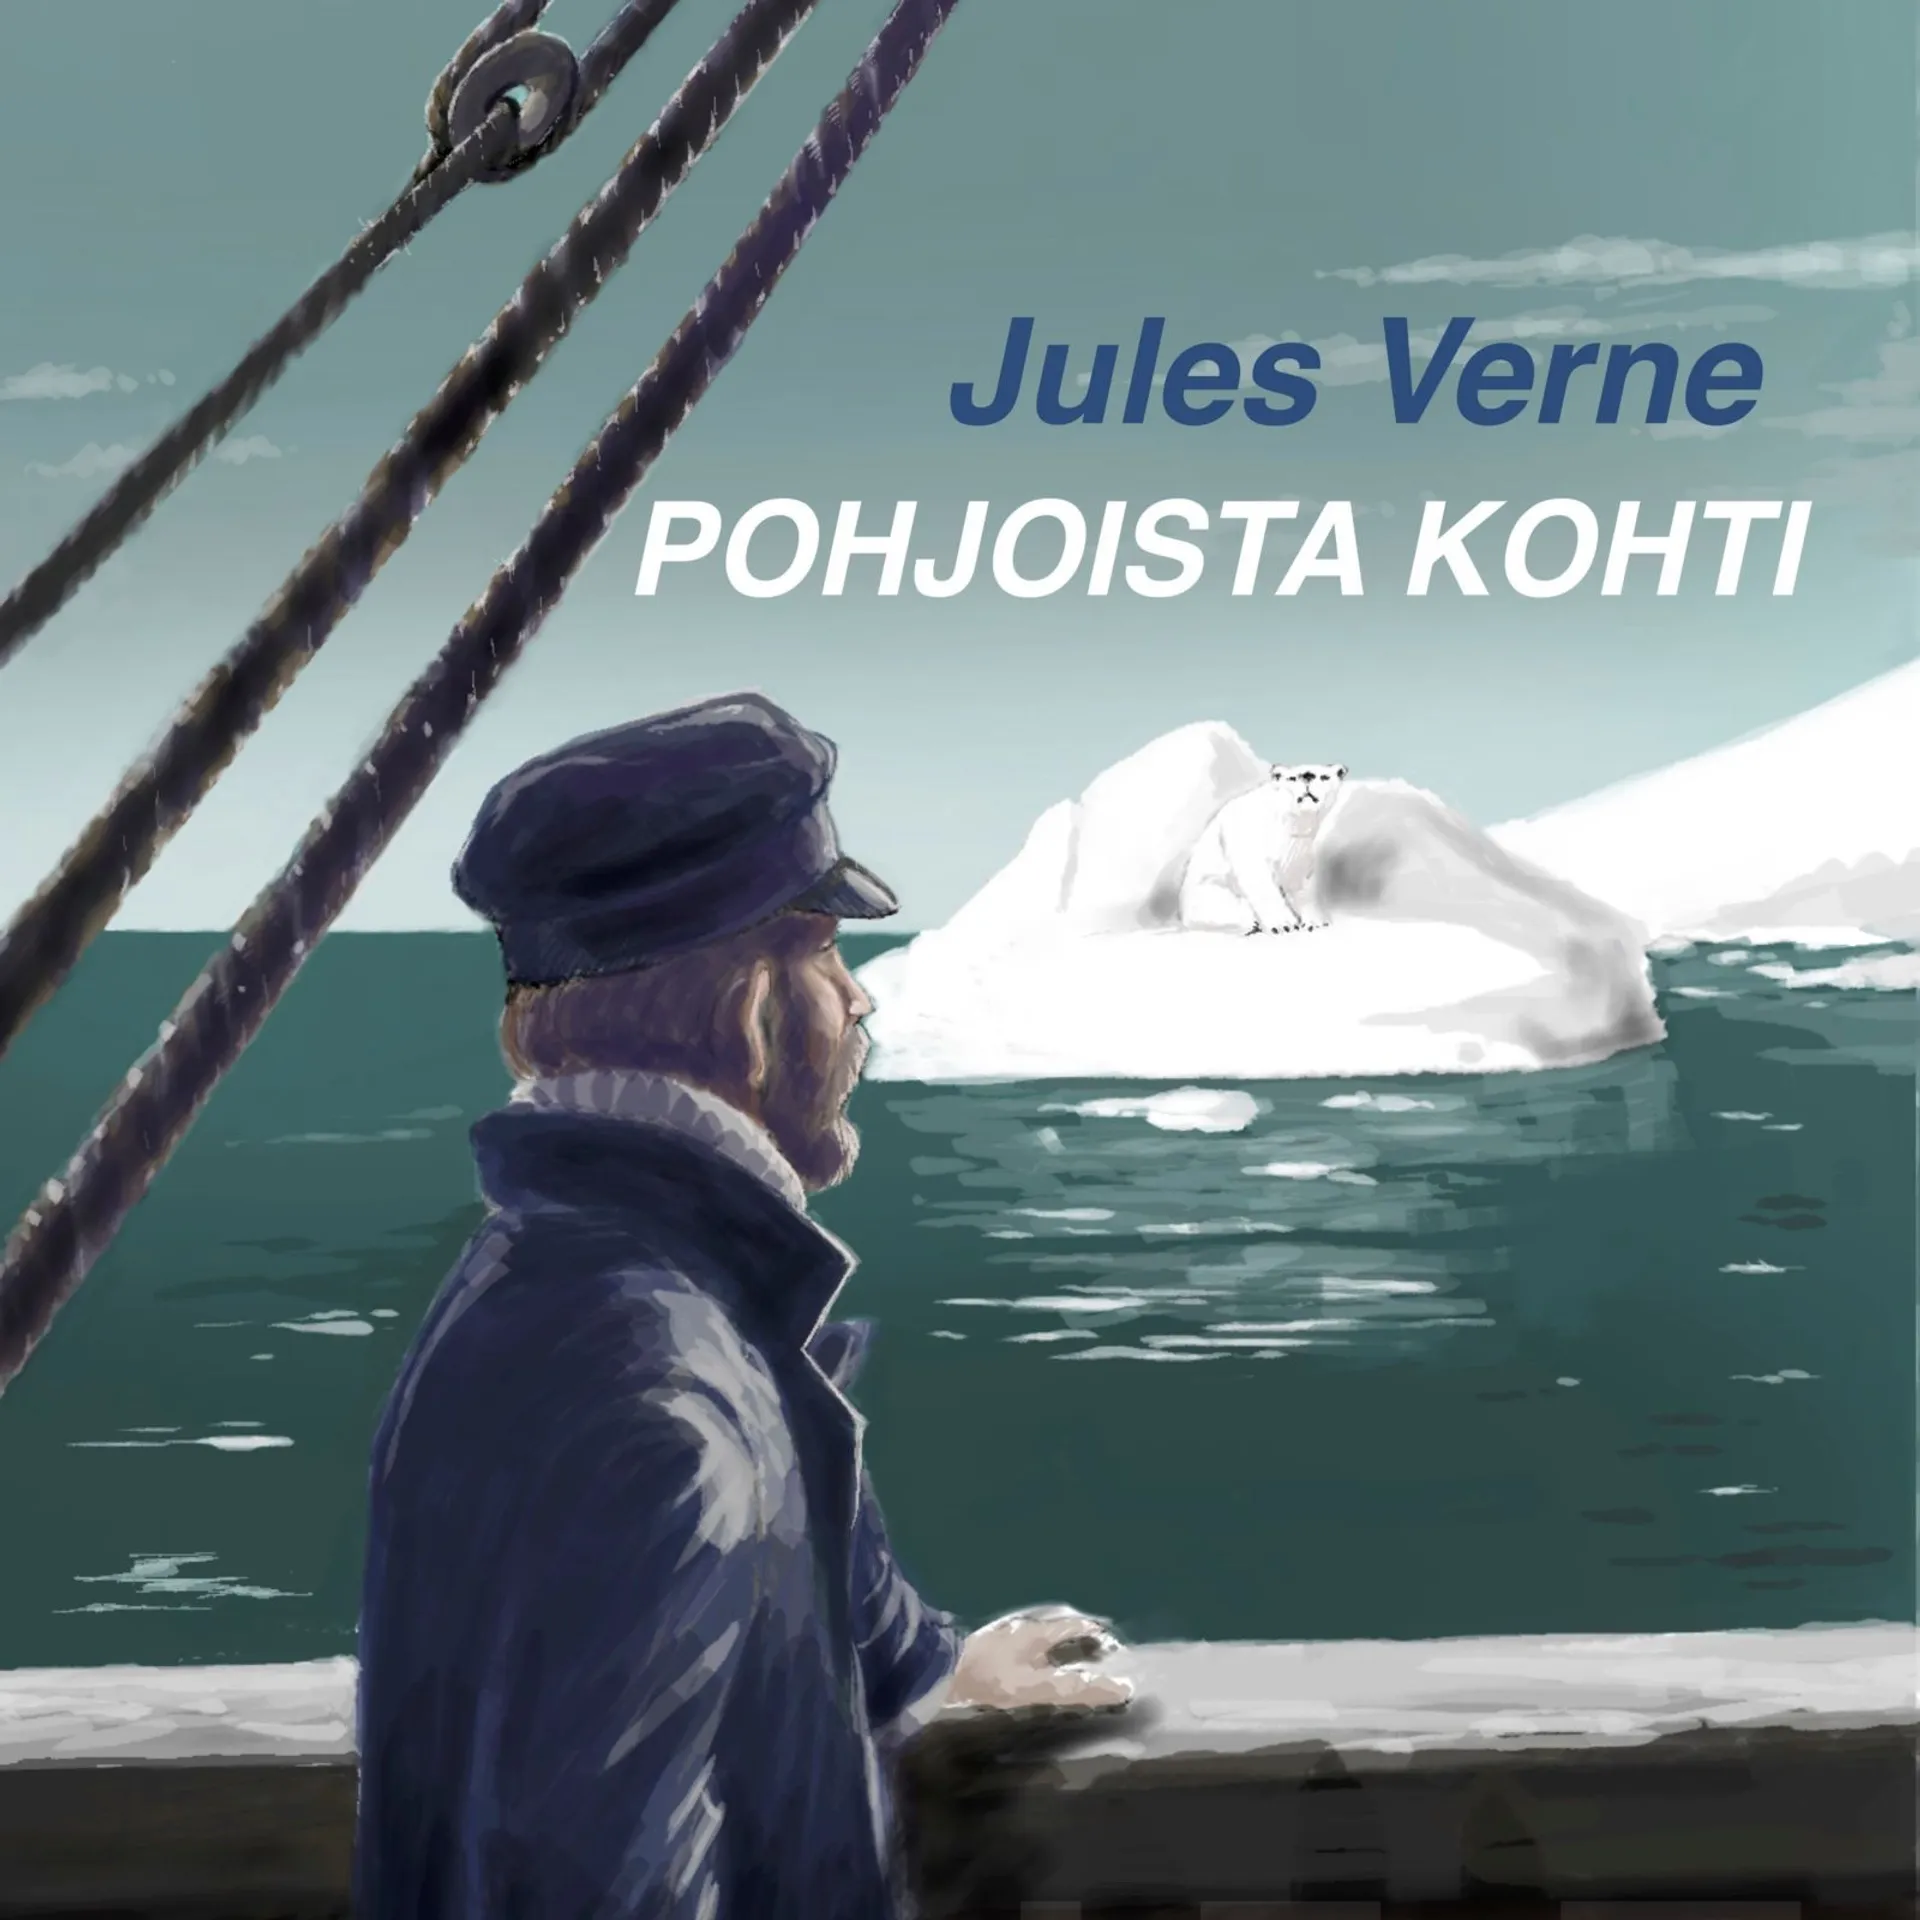 Verne, Pohjoista kohti (mp3-cd)